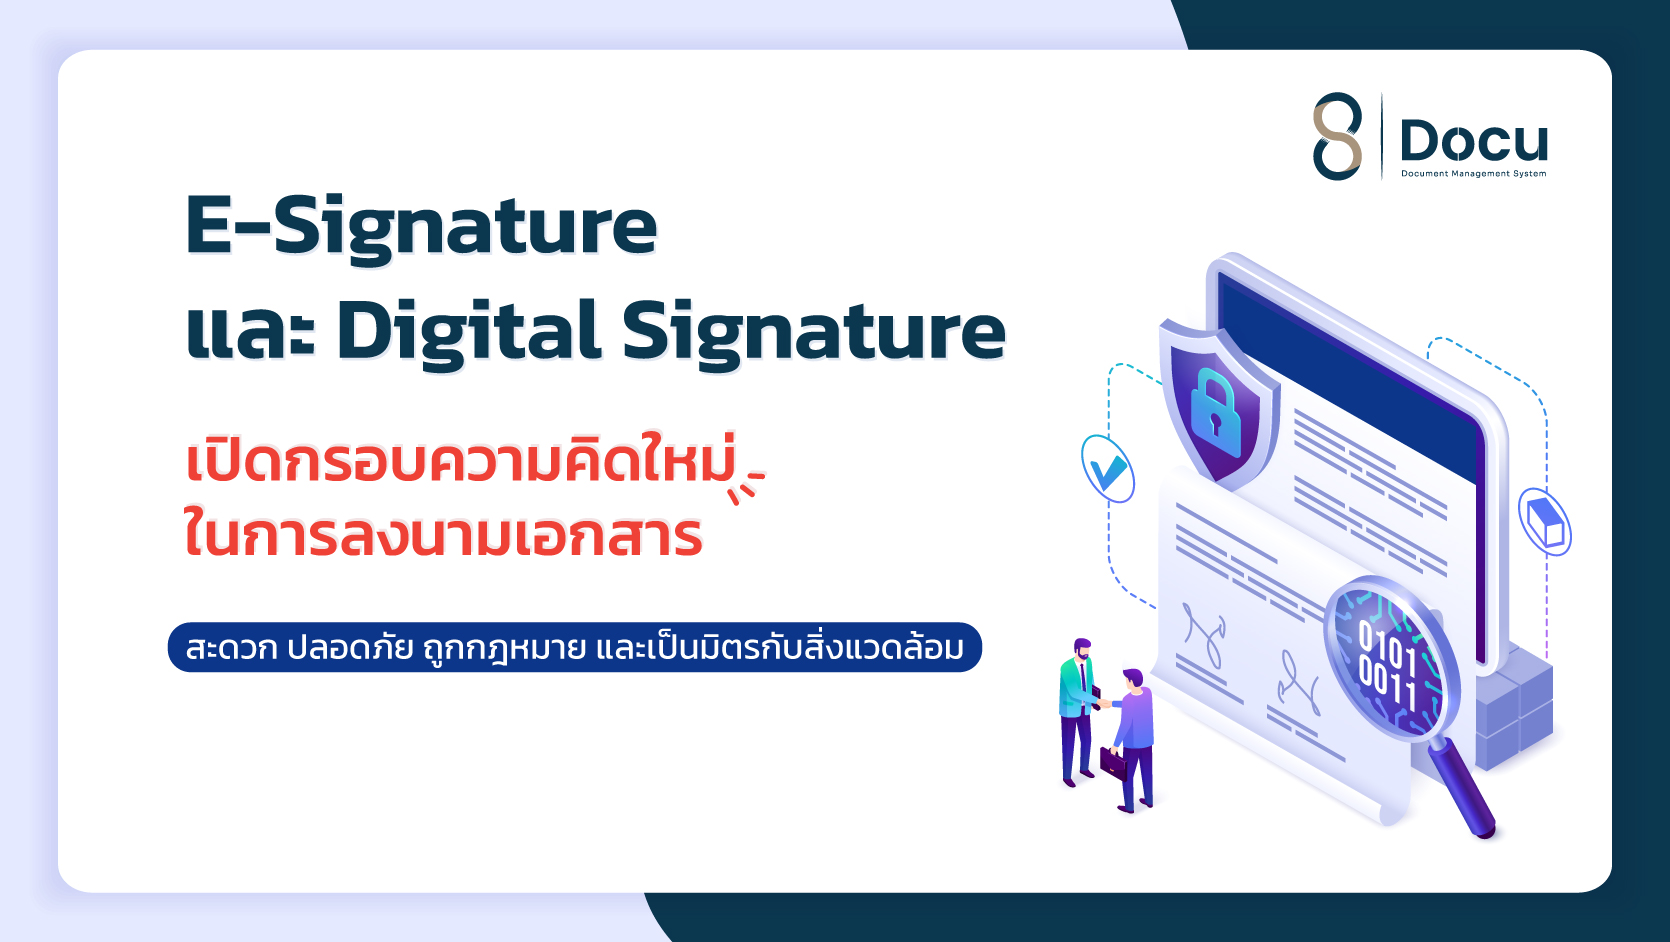 E-Signature และ Digital Signature ต่างกันอย่างไร